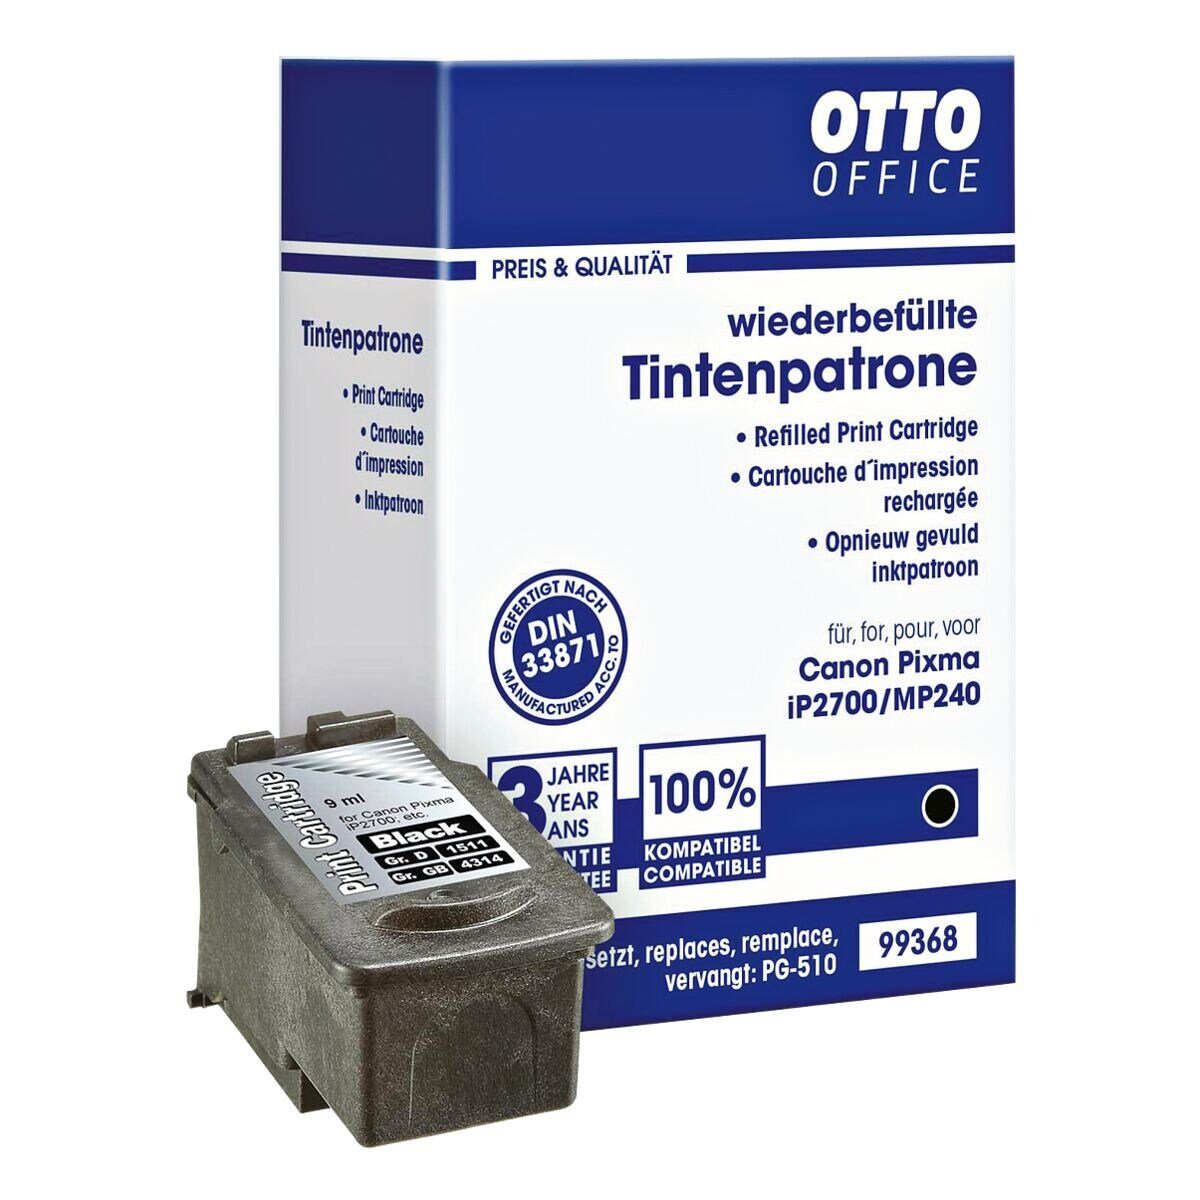 Otto Office  Office PG-510 Tintenpatrone (ersetzt Canon PG-510, schwarz)